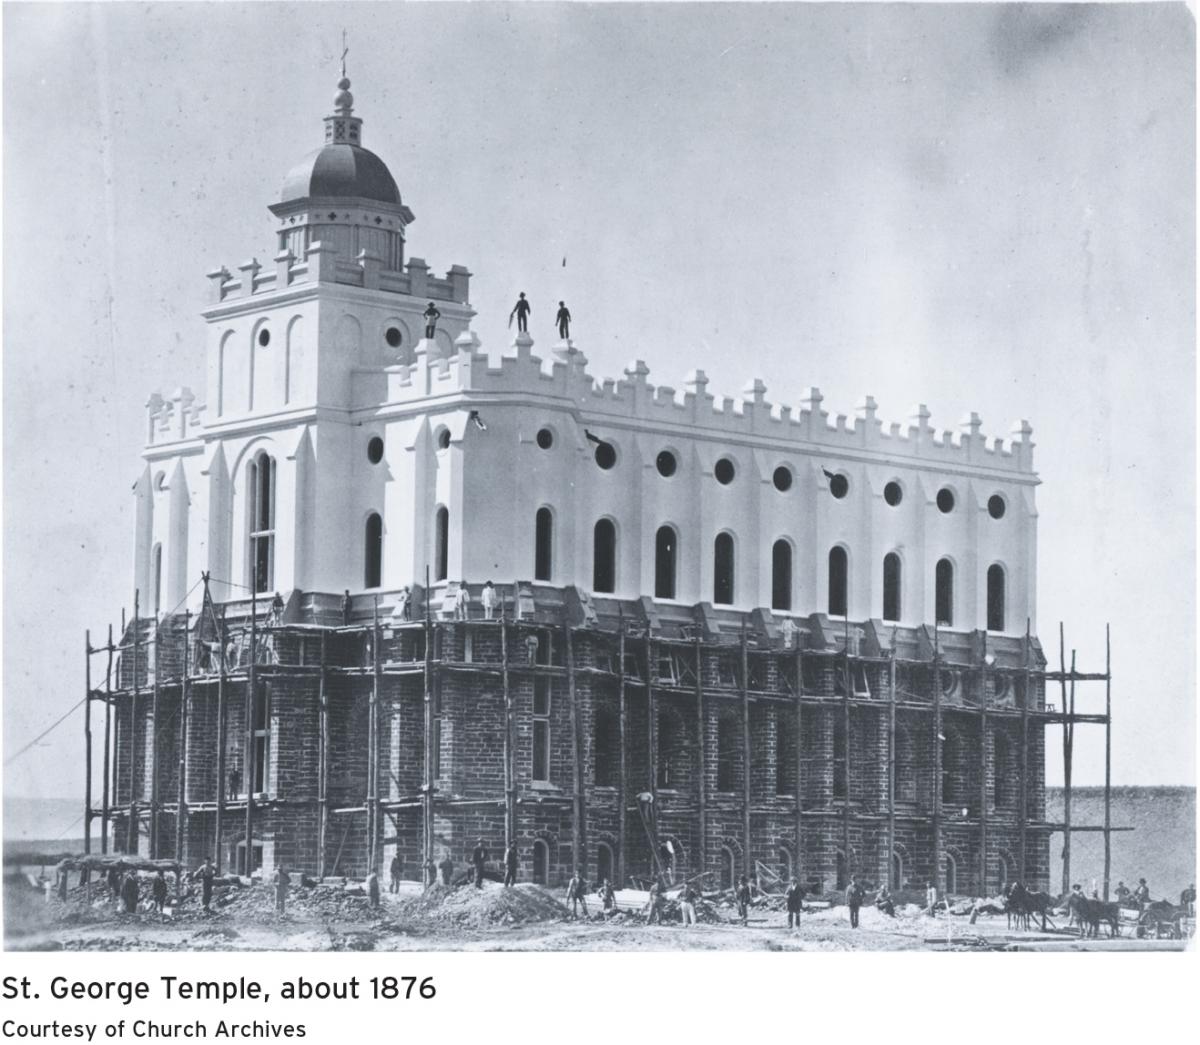 "St. George Temple under construction, 1876"